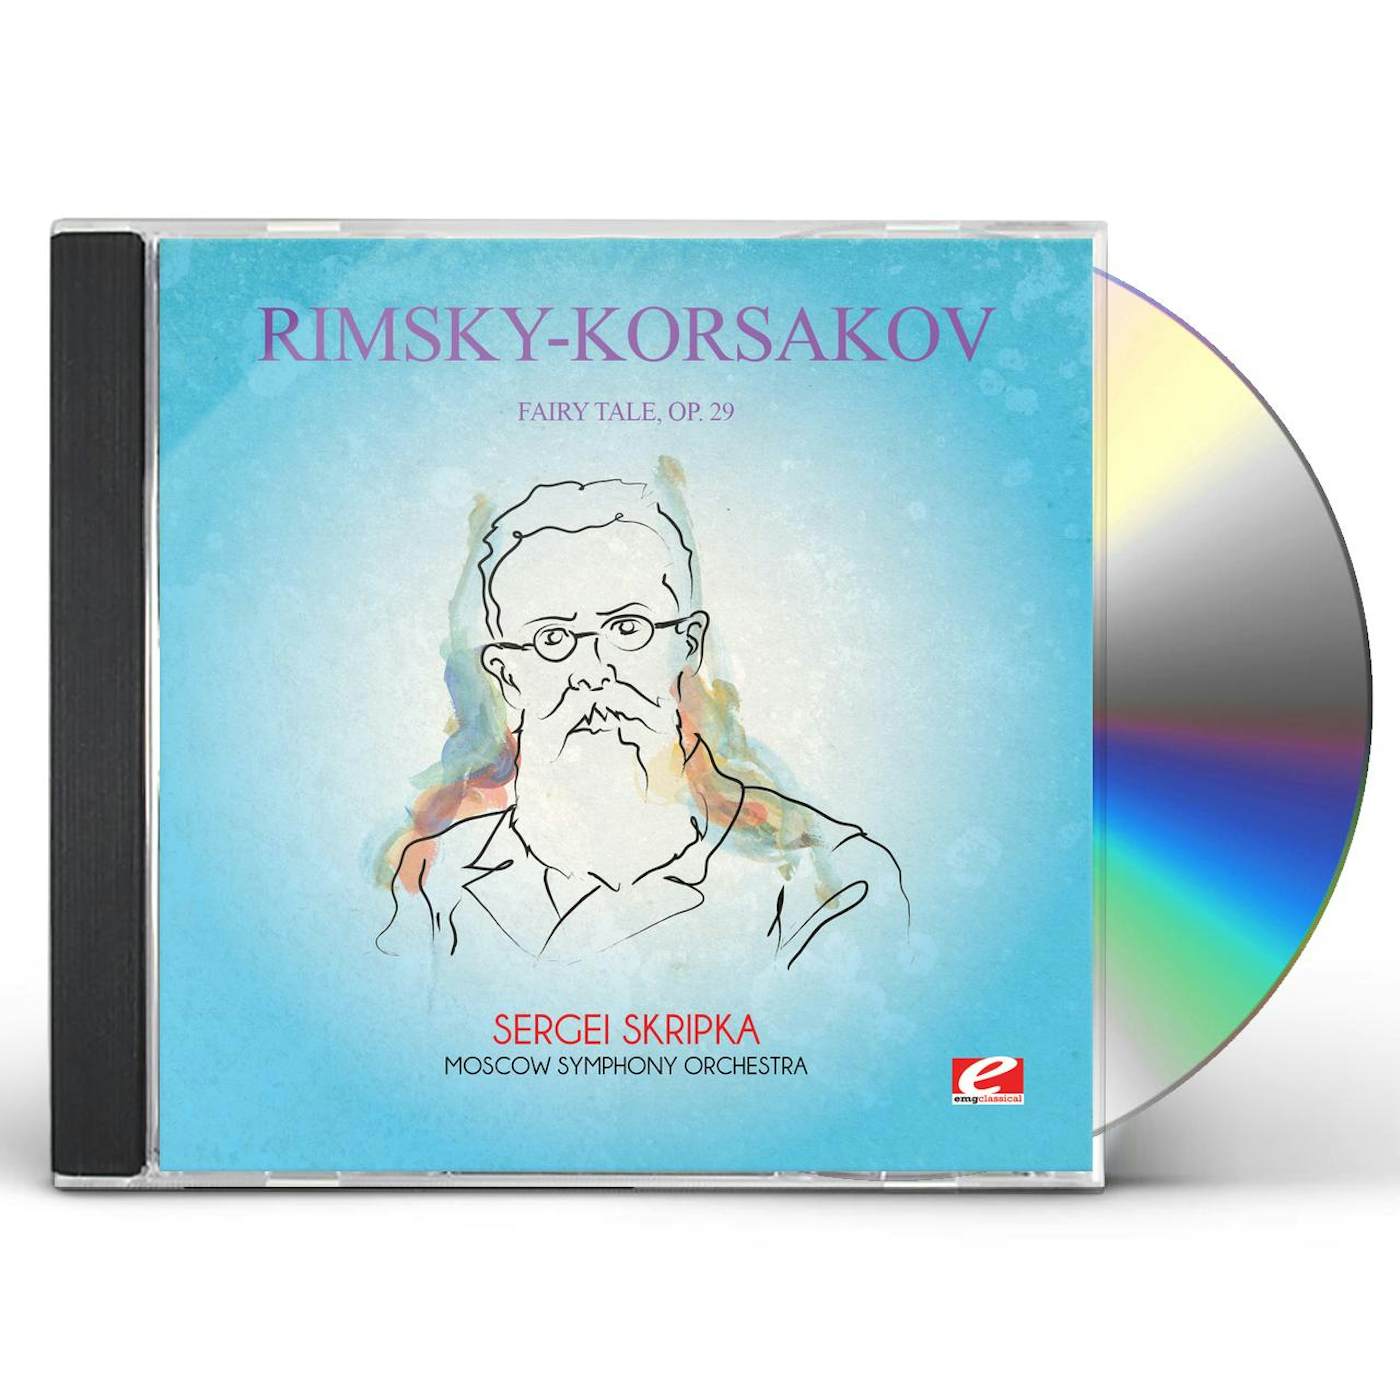 Rimsky-Korsakov FAIRY TALE 29 CD